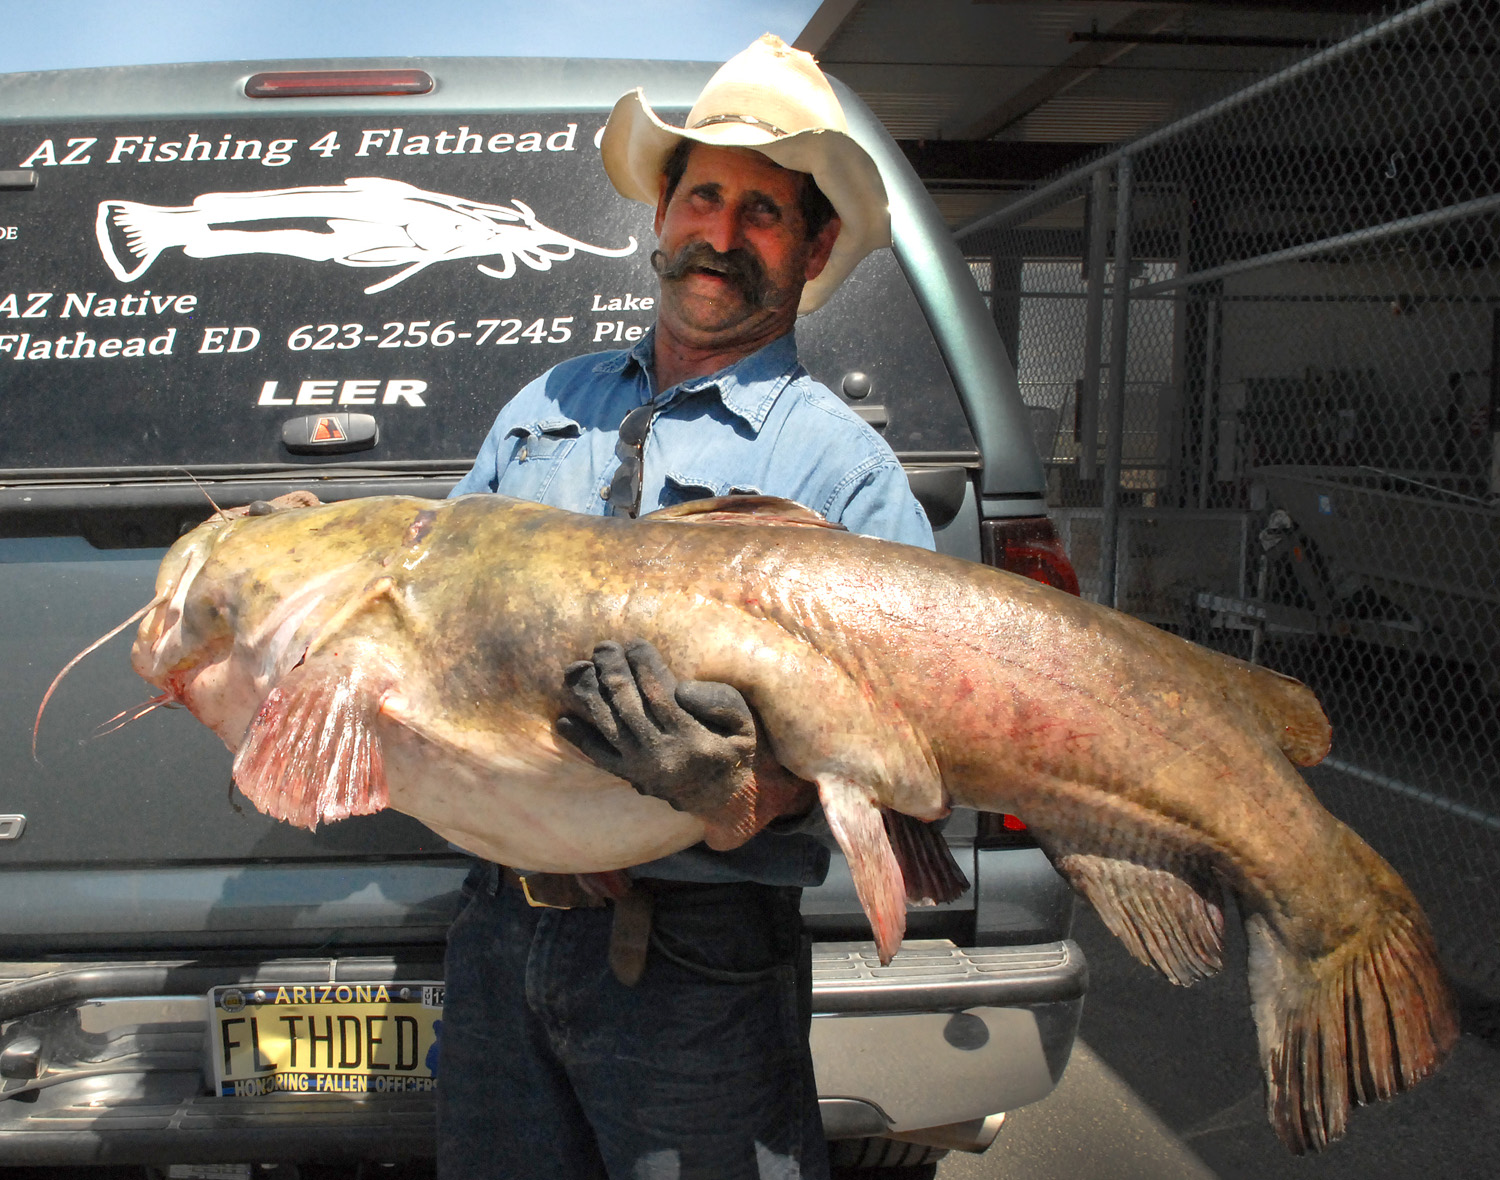 Fisherman reels in Arizona's heaviest recorded fish